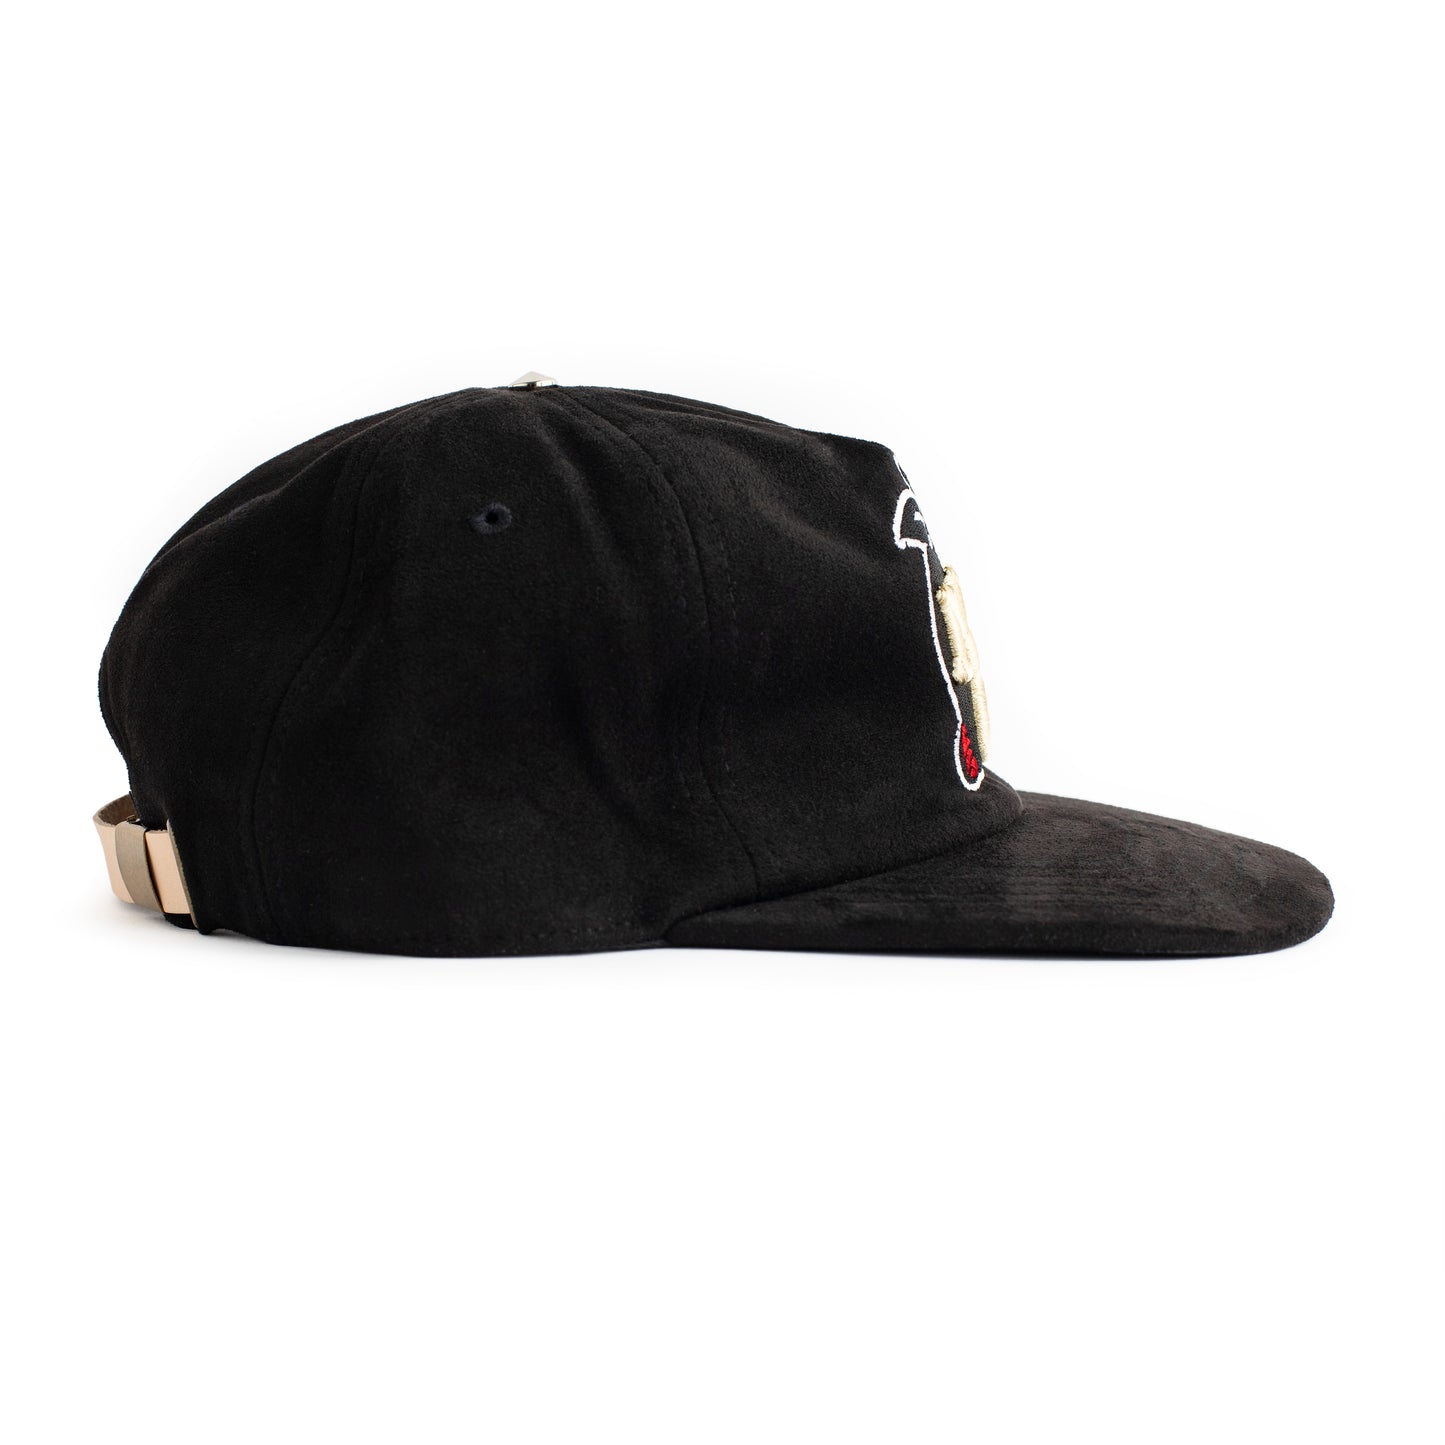 OLD YORK "APPLE" CAP (BLACK)